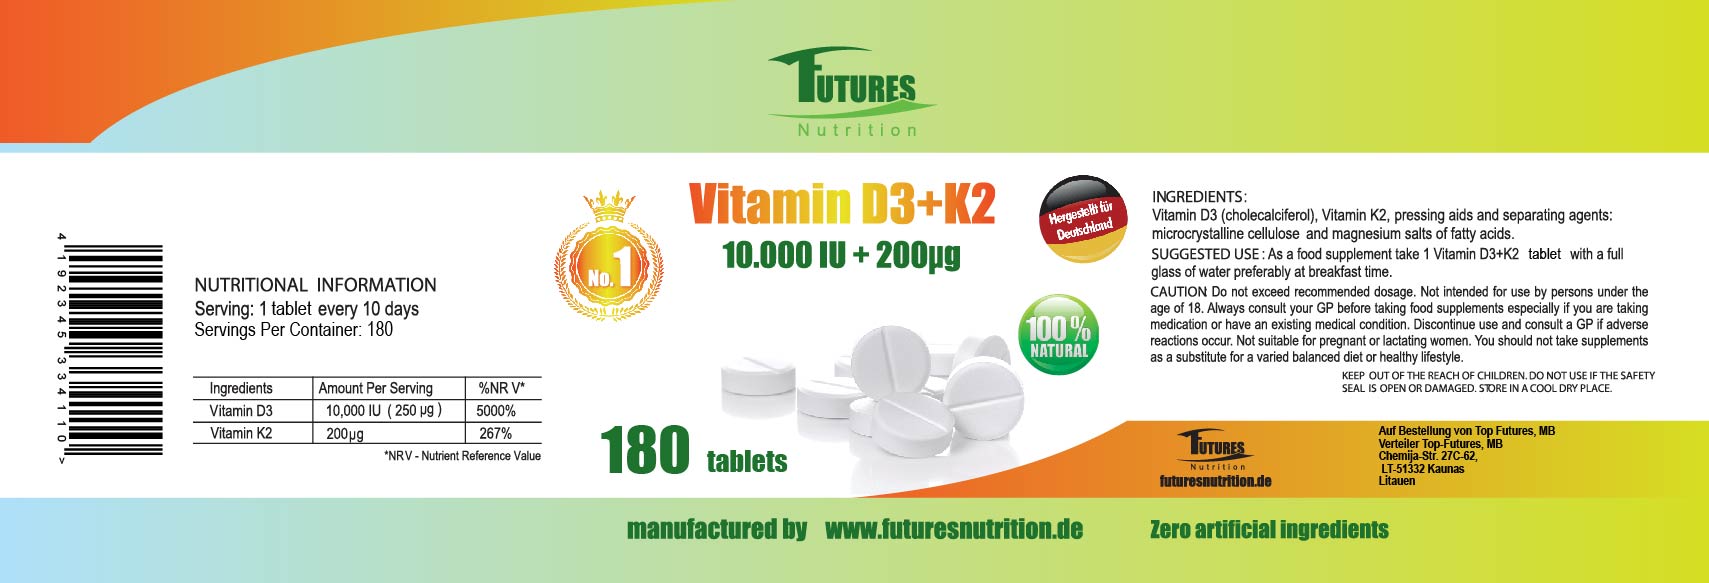 50 x vitamin D3 + K2 10000i.e 9000 tabletter